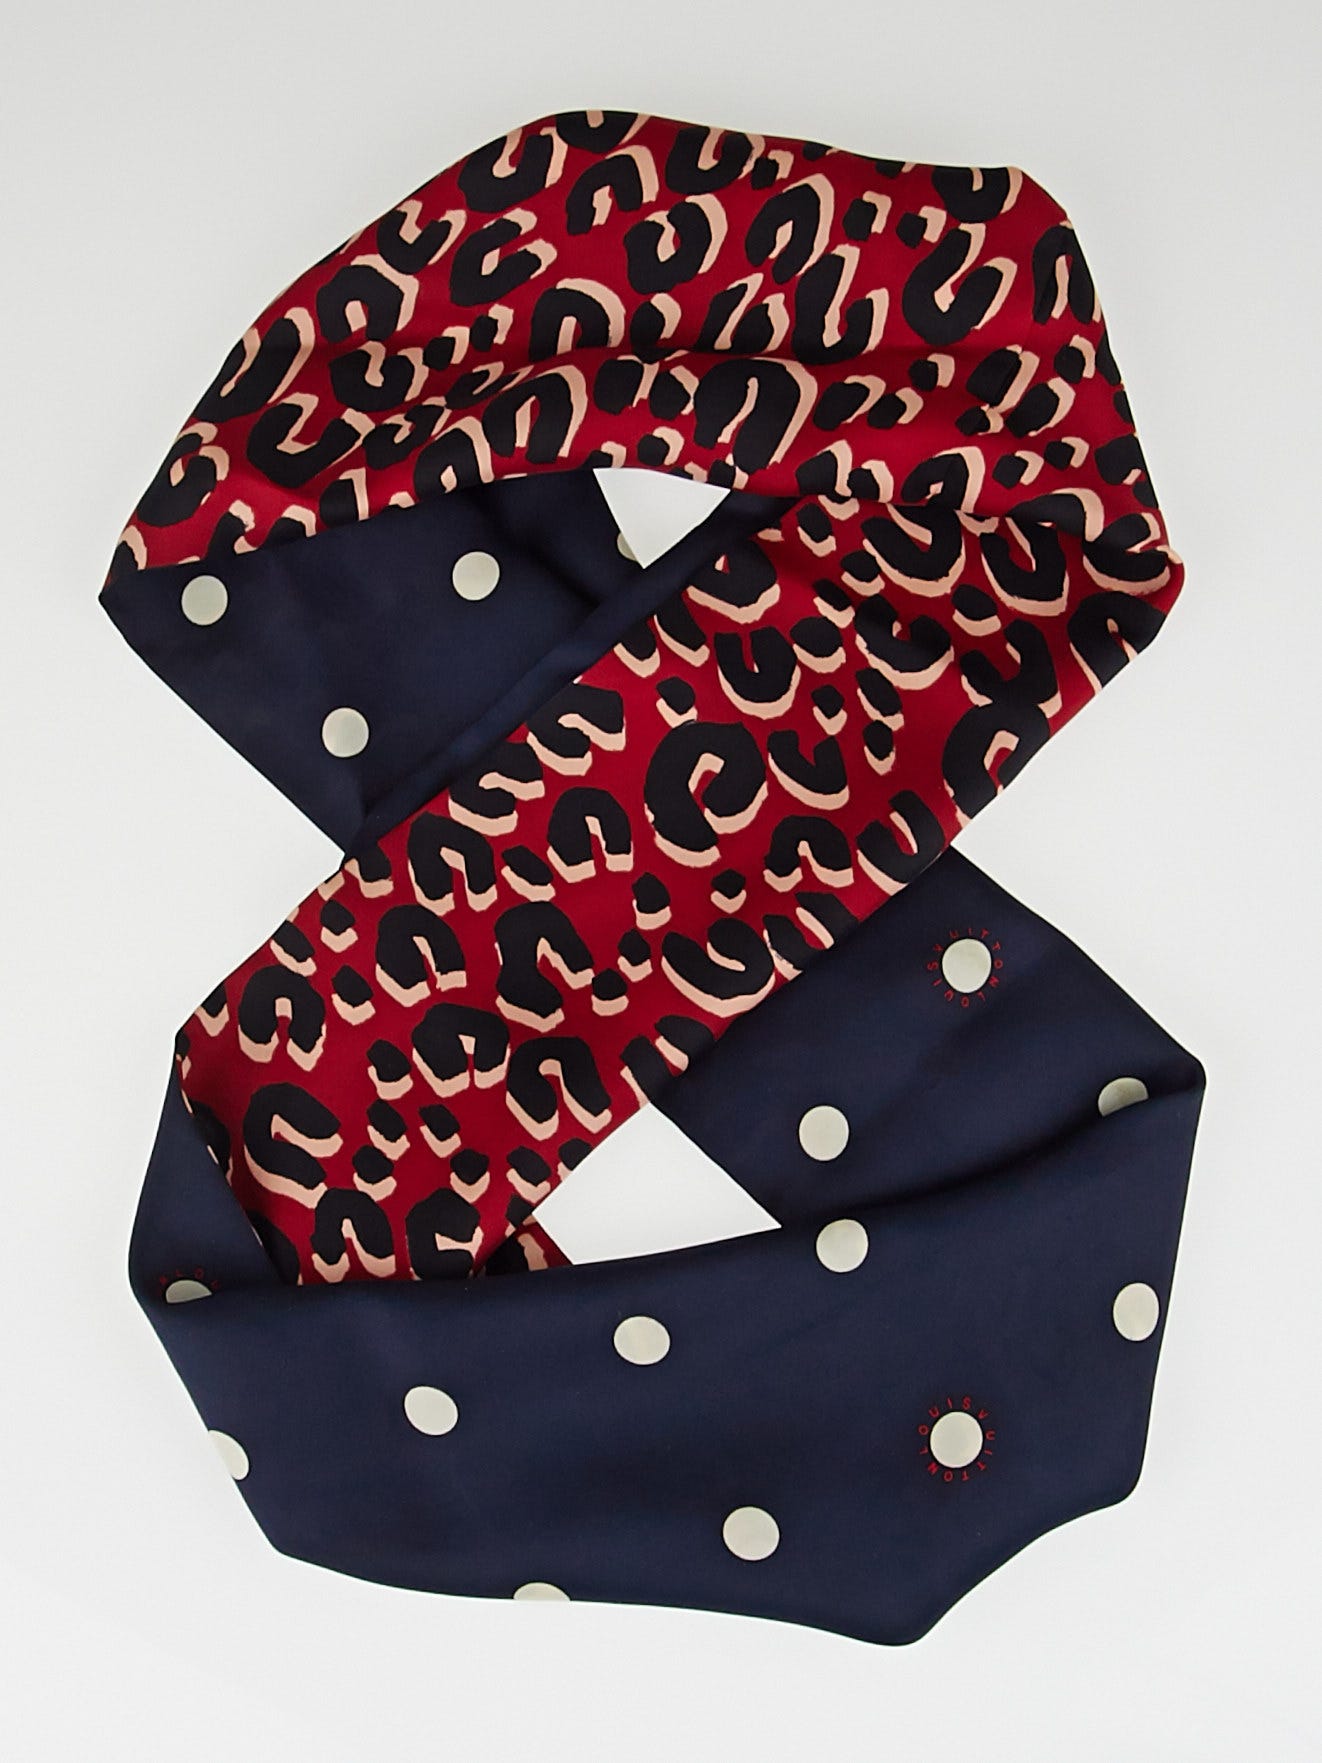 Louis Vuitton Scarf Snood Leopard Navy x Red Multicolor 100% Silk